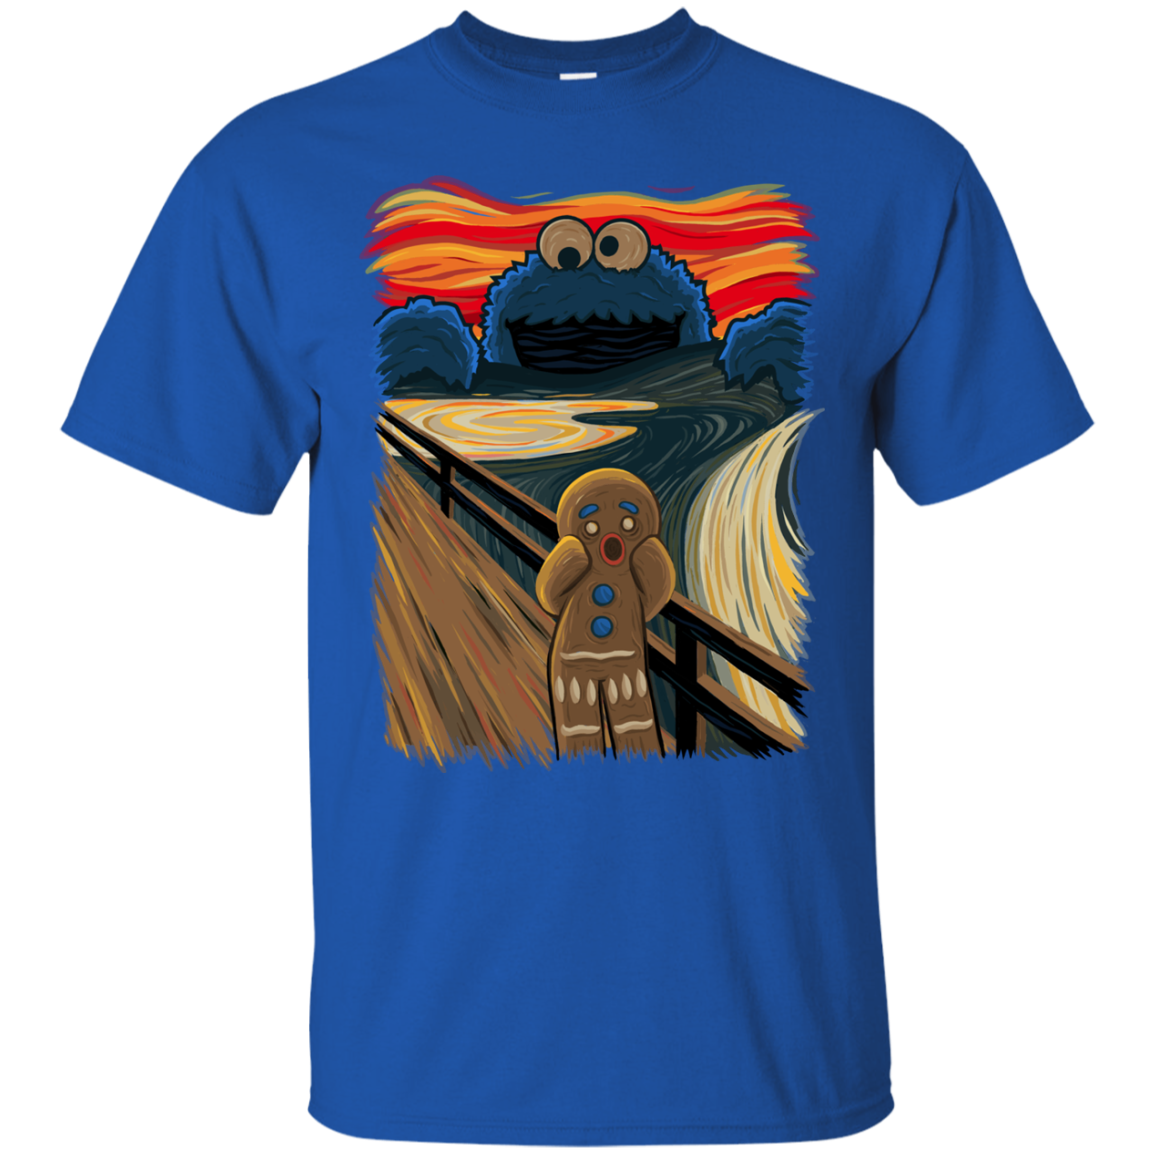 The Cookie Muncher T-Shirt